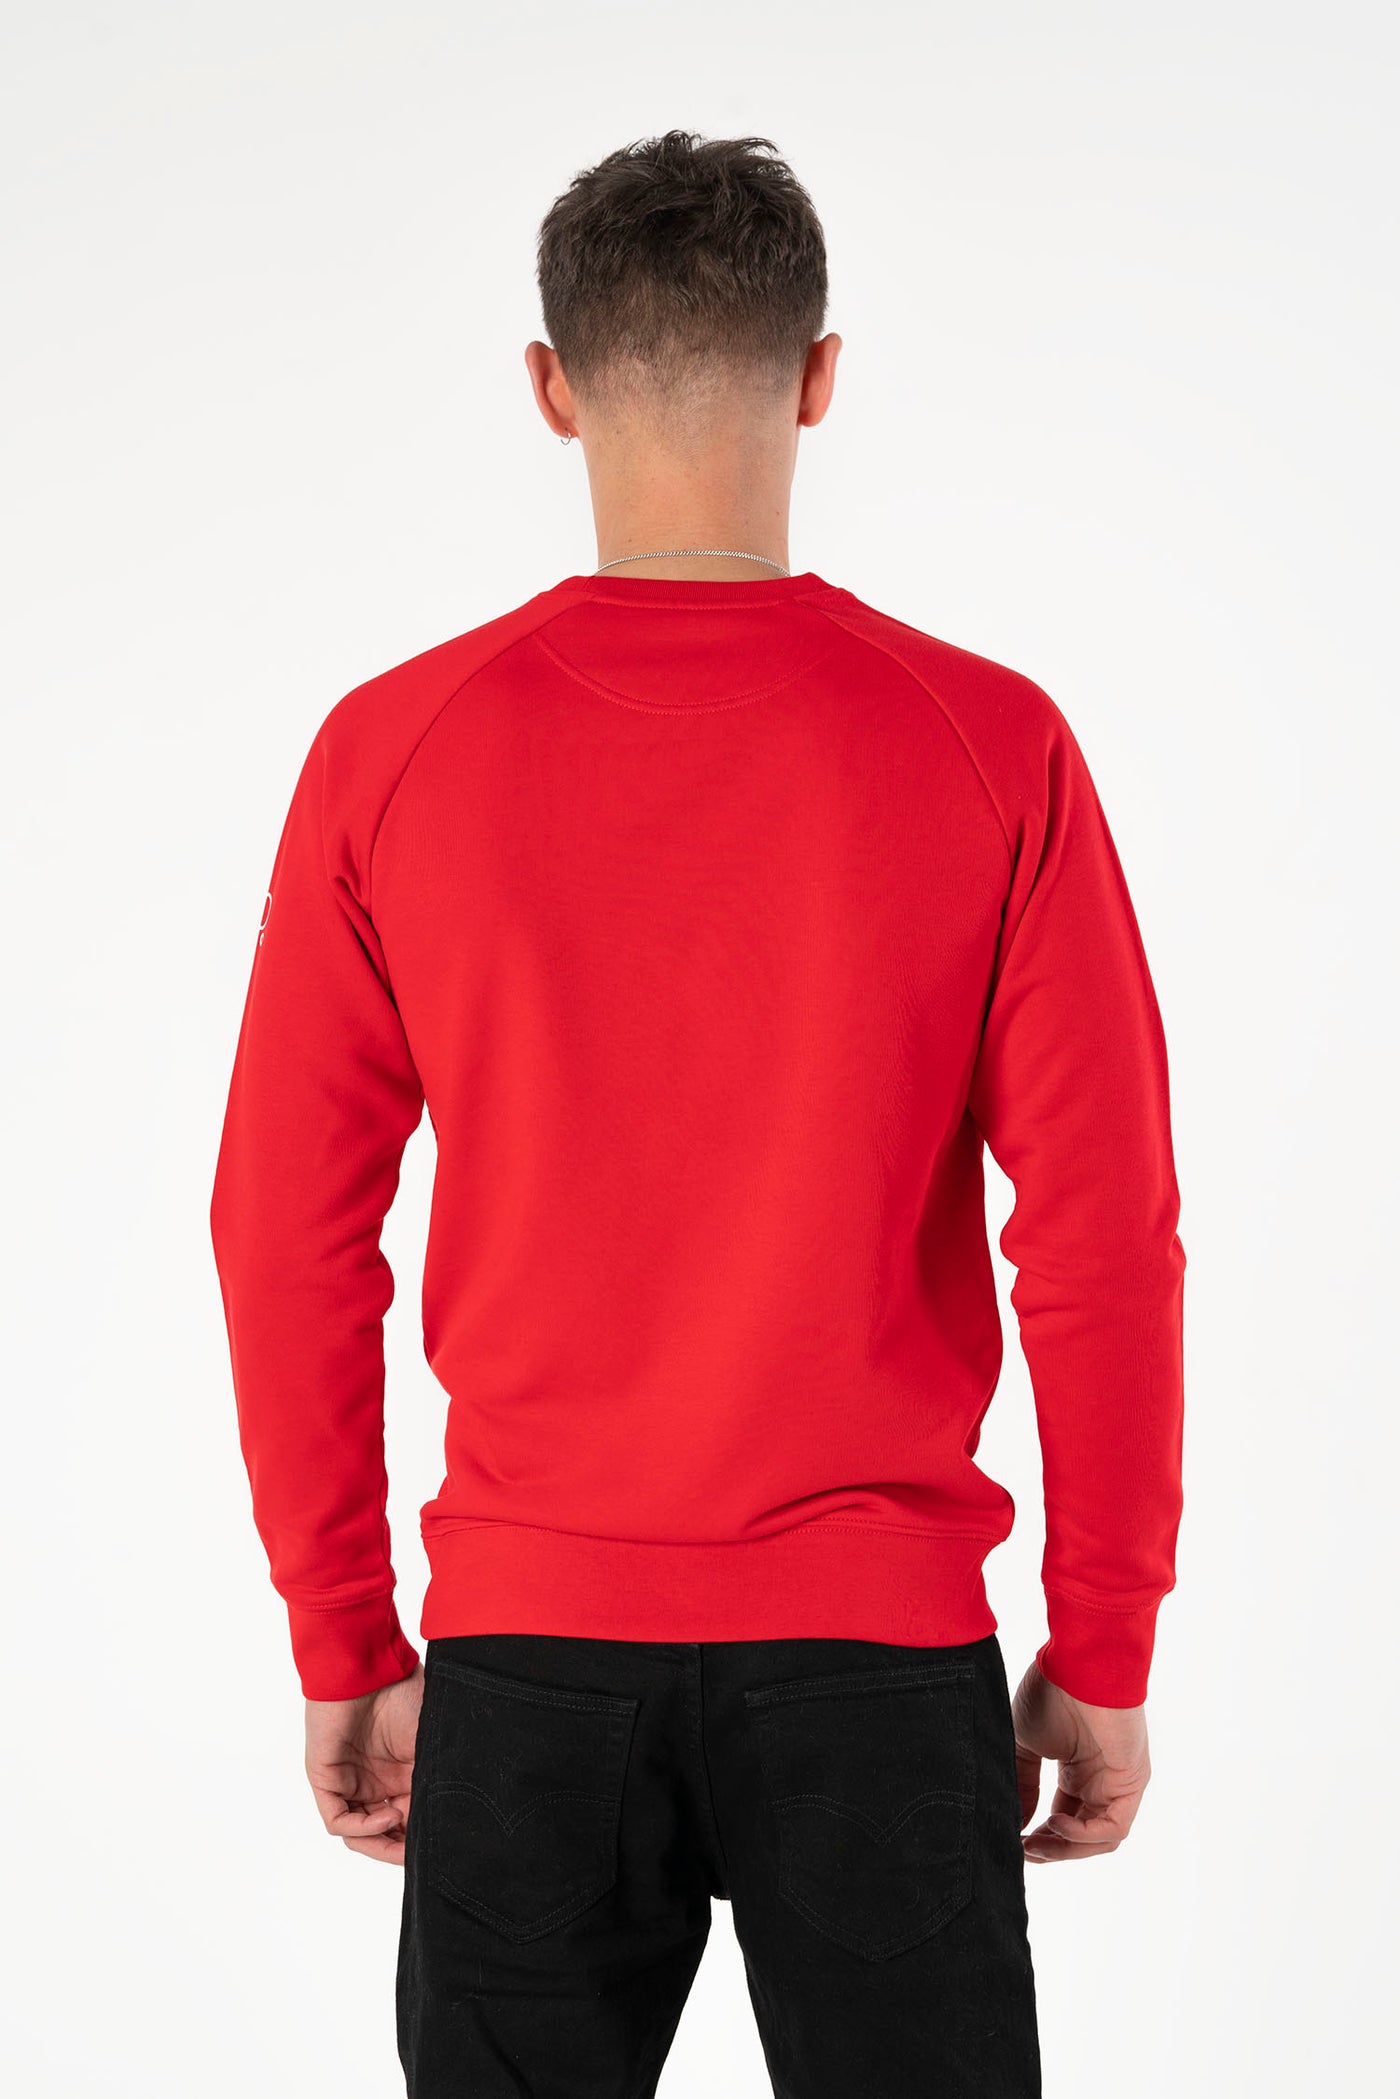 Signature Red Sweatshirt-Sweatshirts-PIRKANI